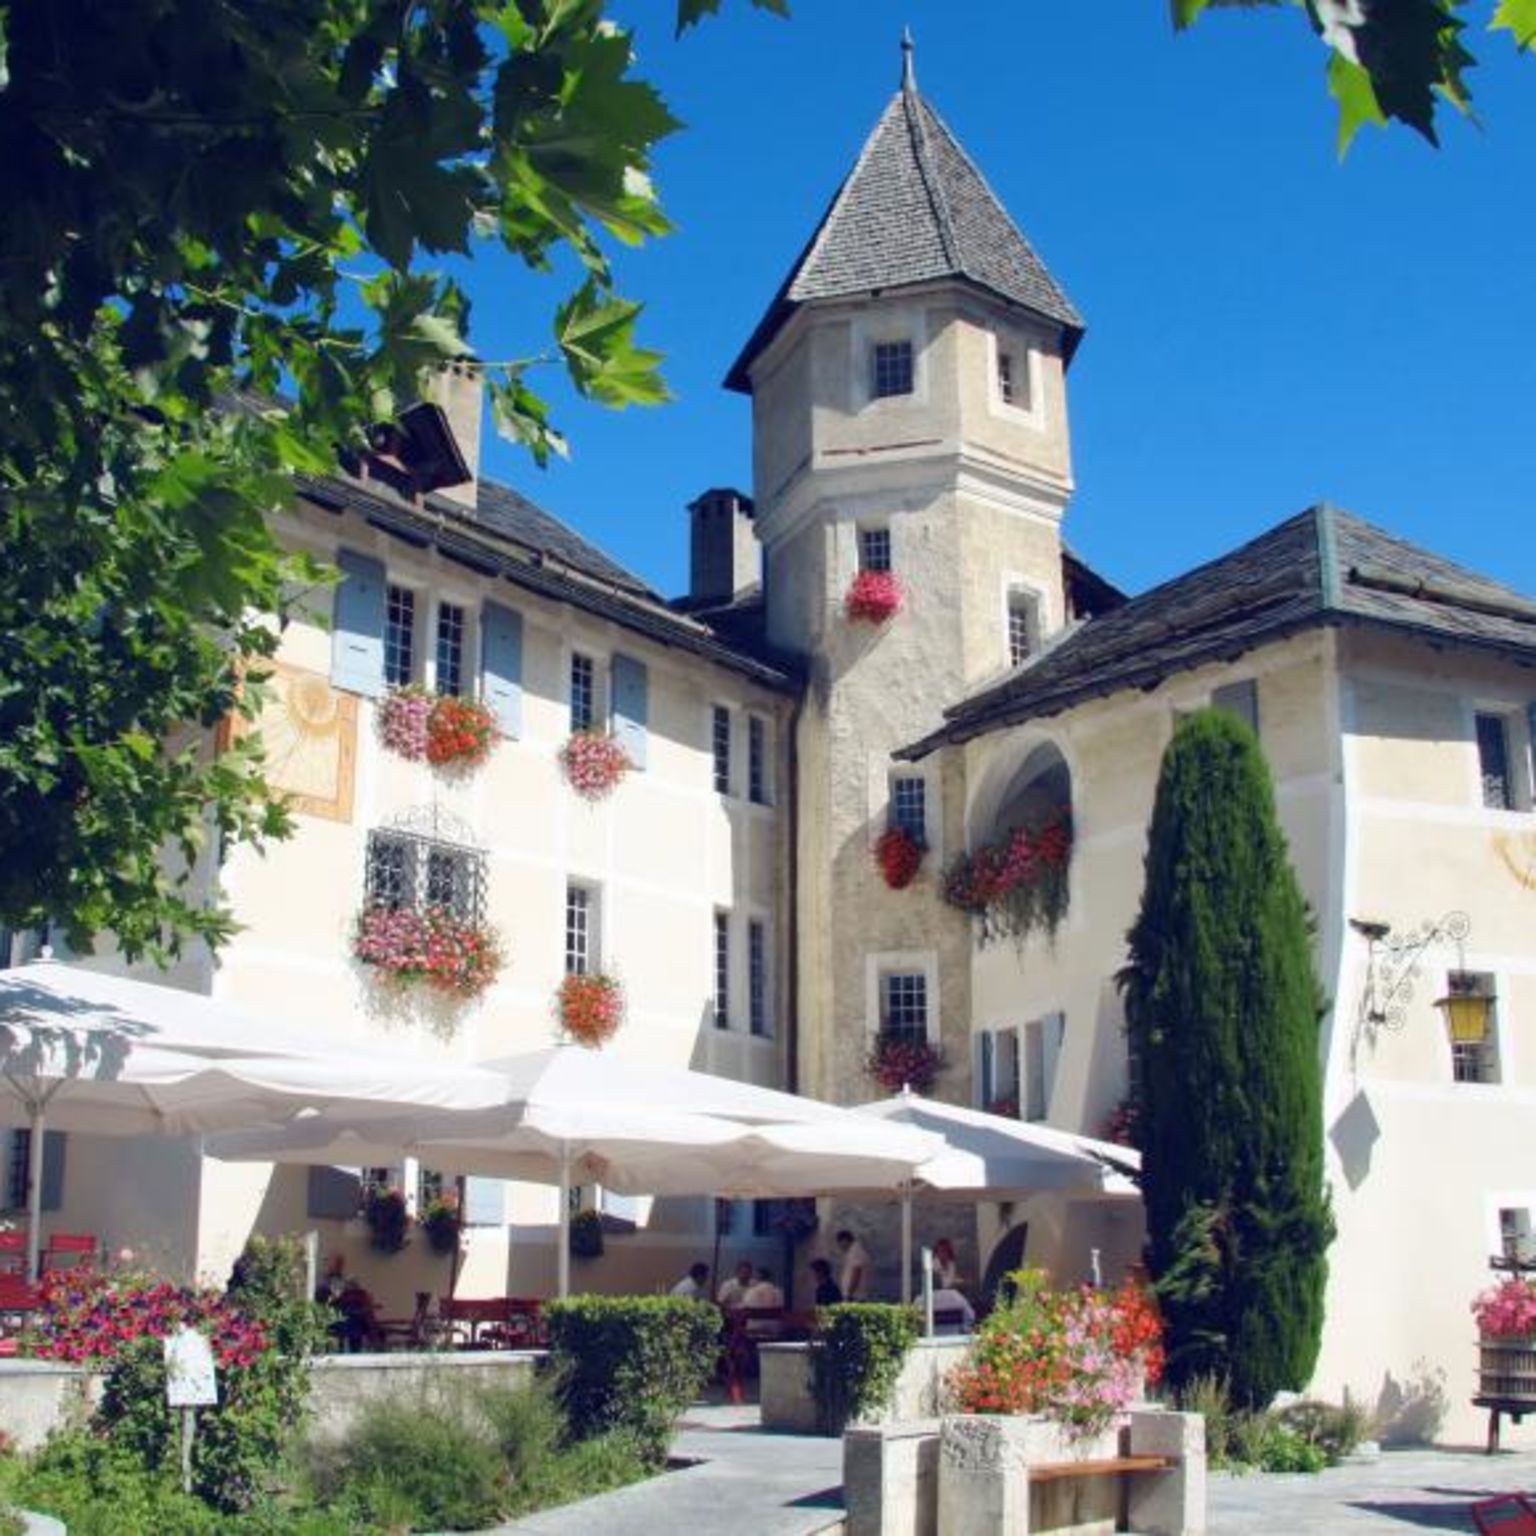 Point of sale Château de Villa, Sierre Valais, Switzerland